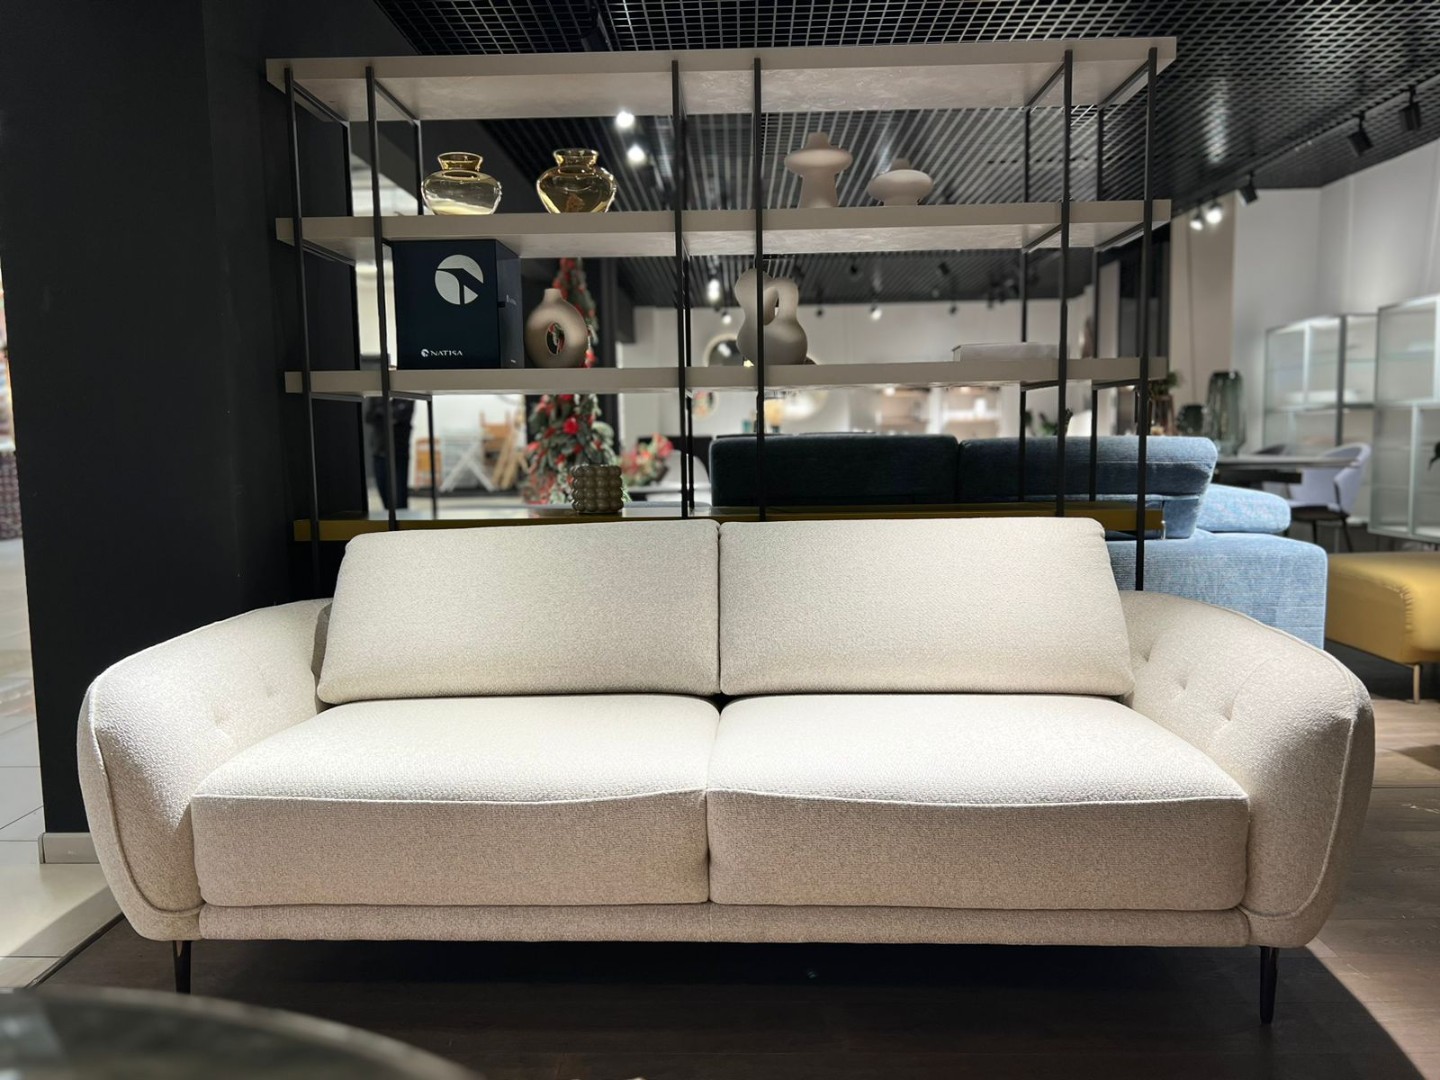 Прямой диван NICOLETTIHOME DAIQUIRI — ₽, купить у официального дилера Nicolettihome